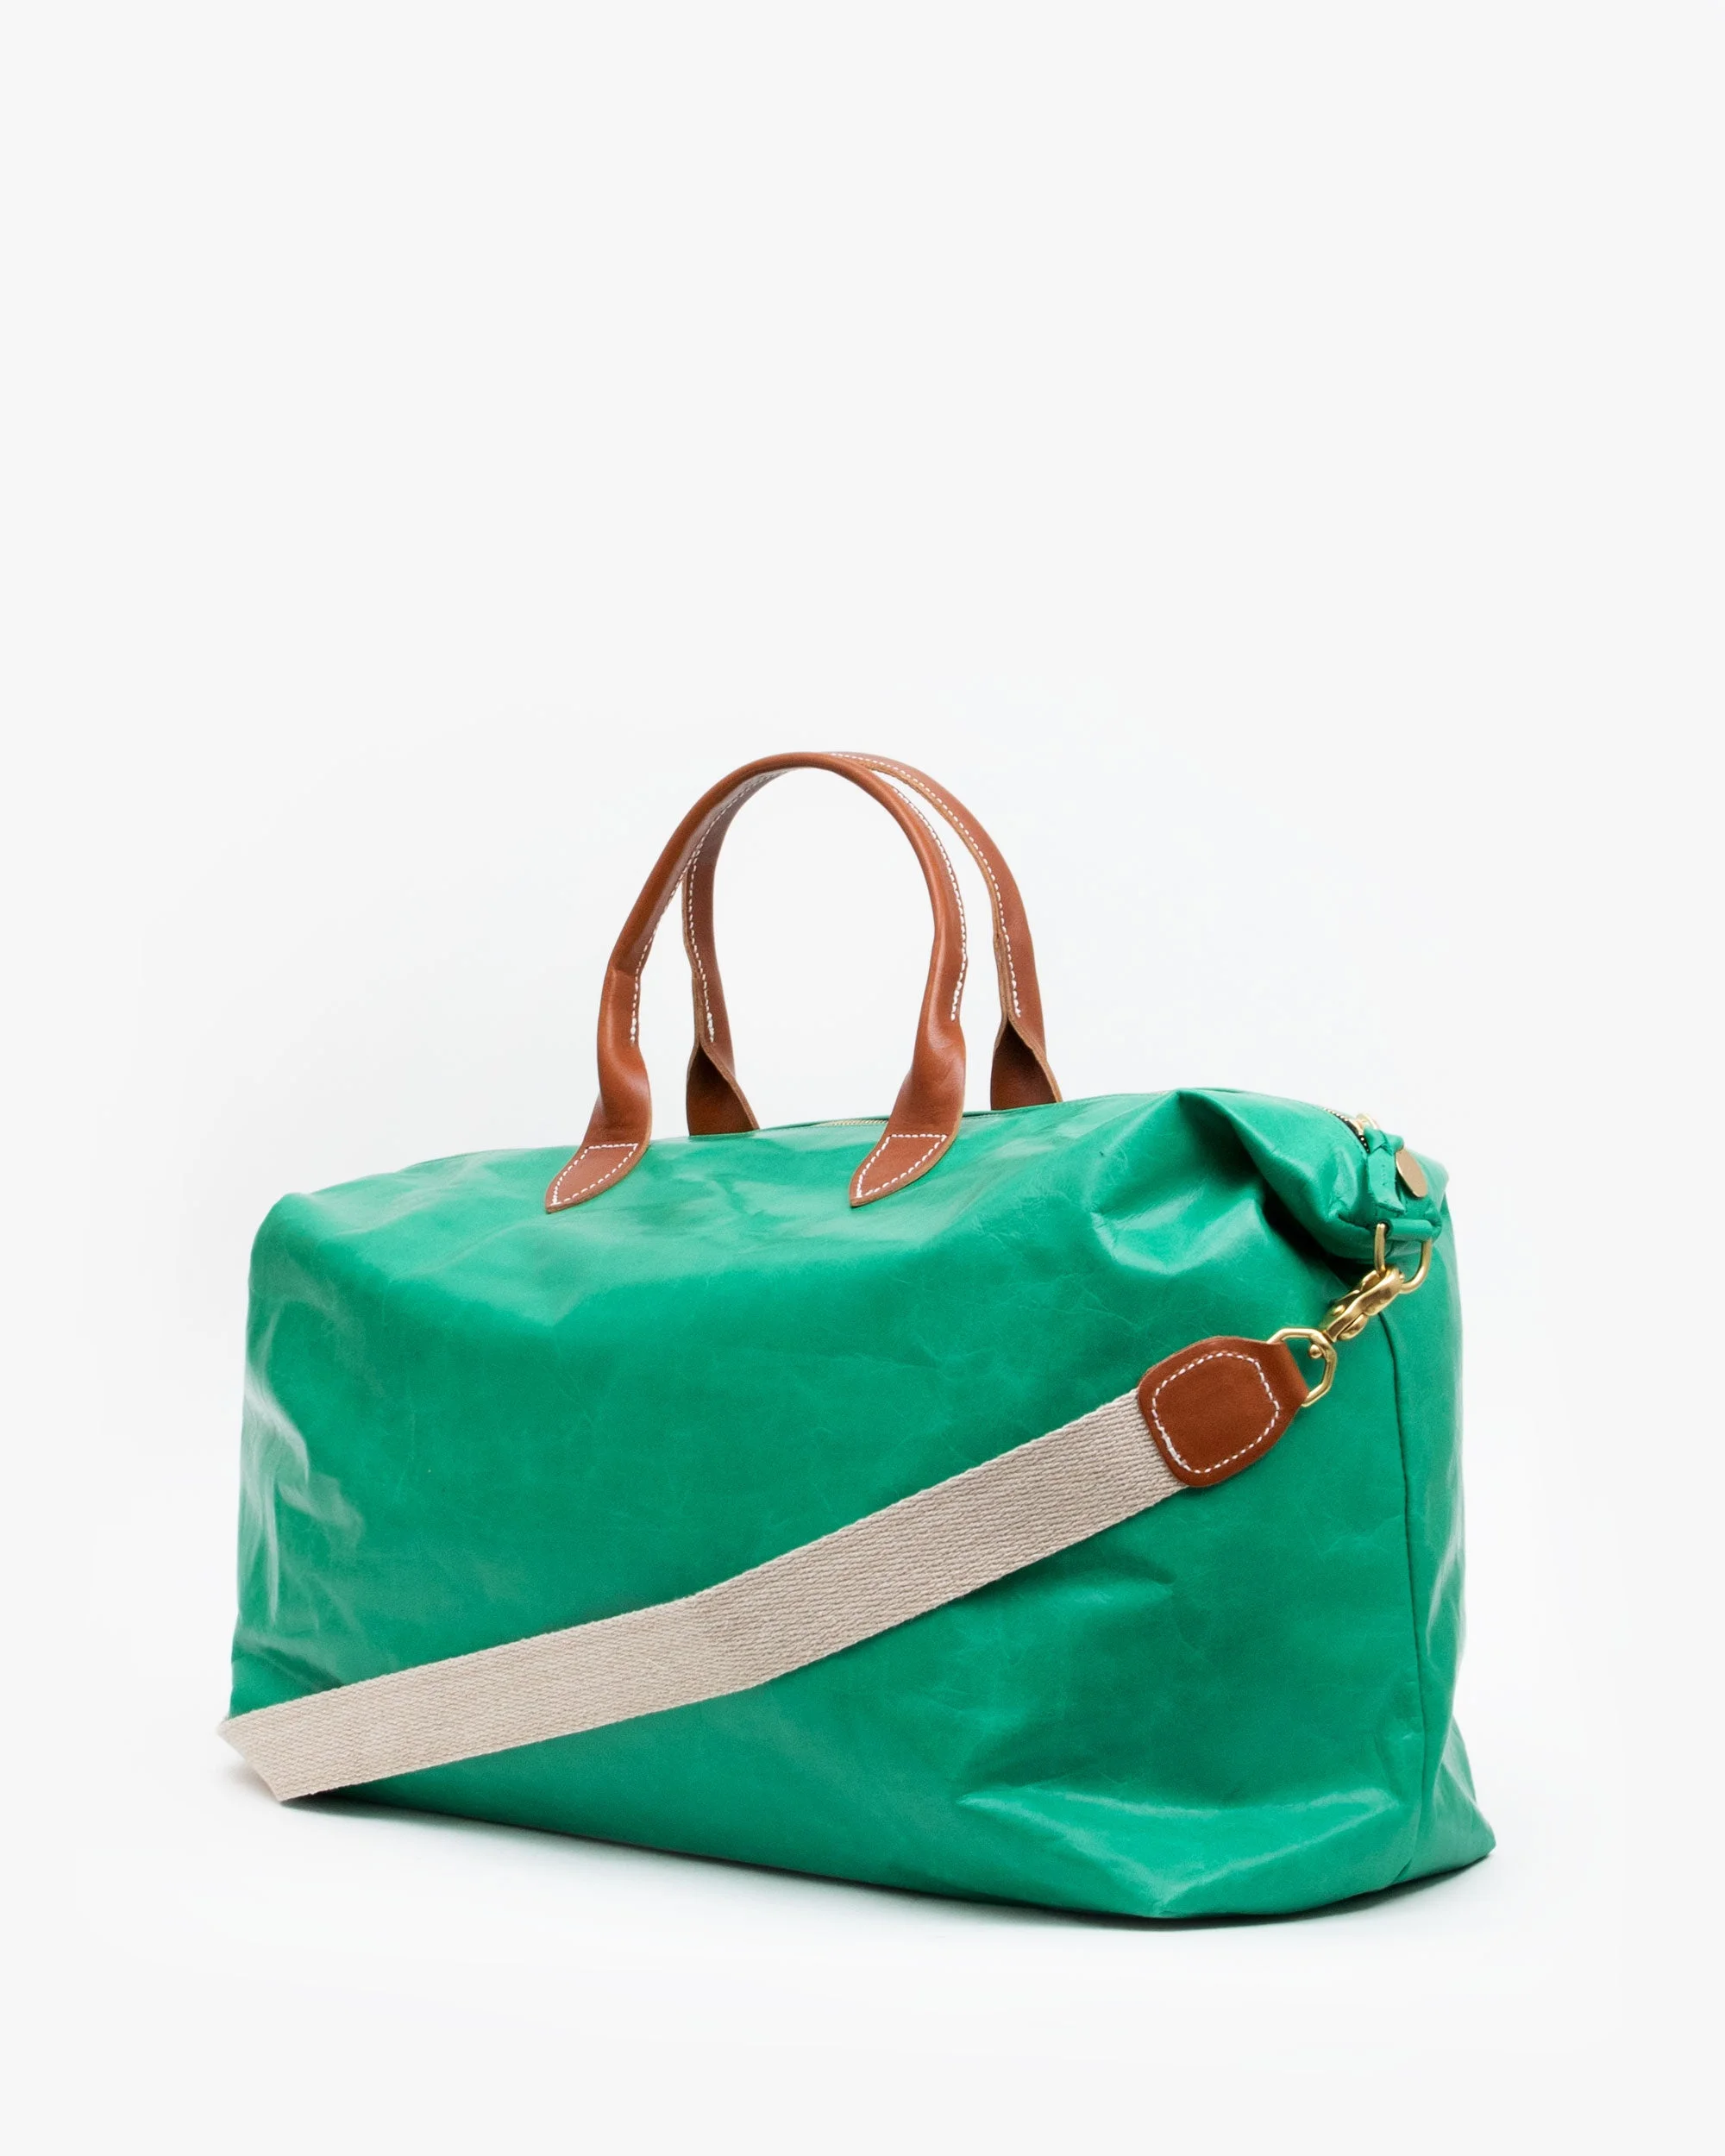 Clare V. Leather Weekender Bag - Green Satchels, Handbags - W2421912